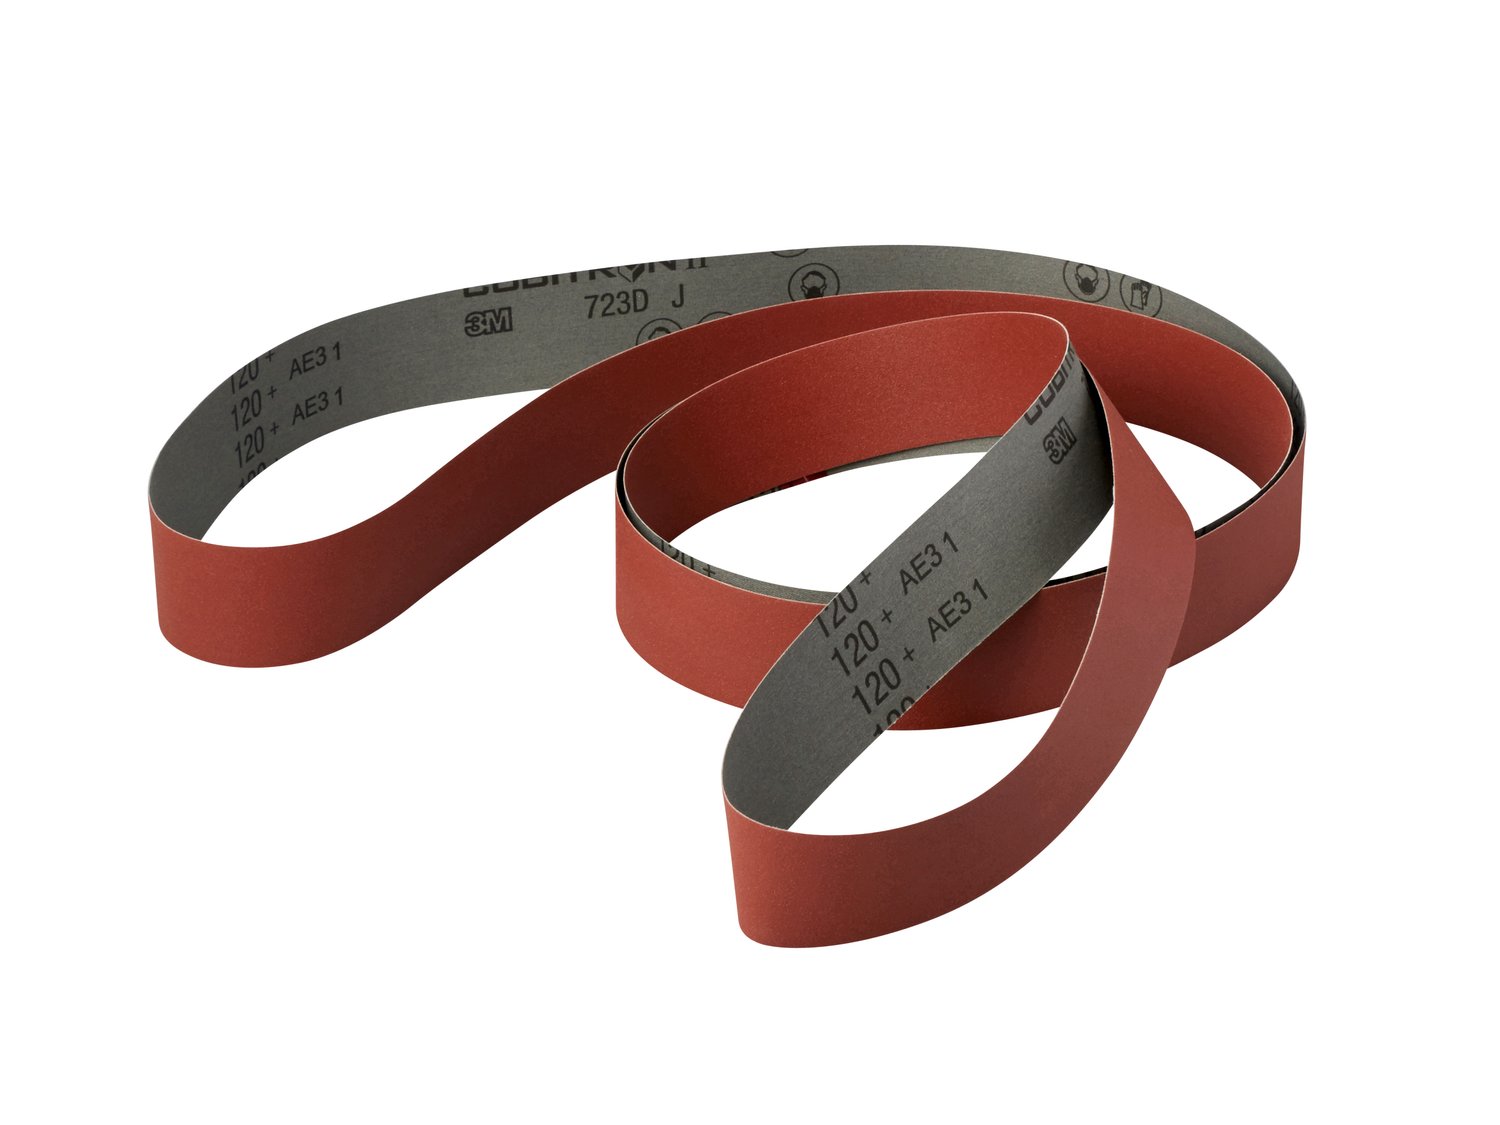 7100201802 - 3M Cubitron II Cloth Belt 723D, 1/2 in x 10 in, 180+ J-weight, 500
ea/Case